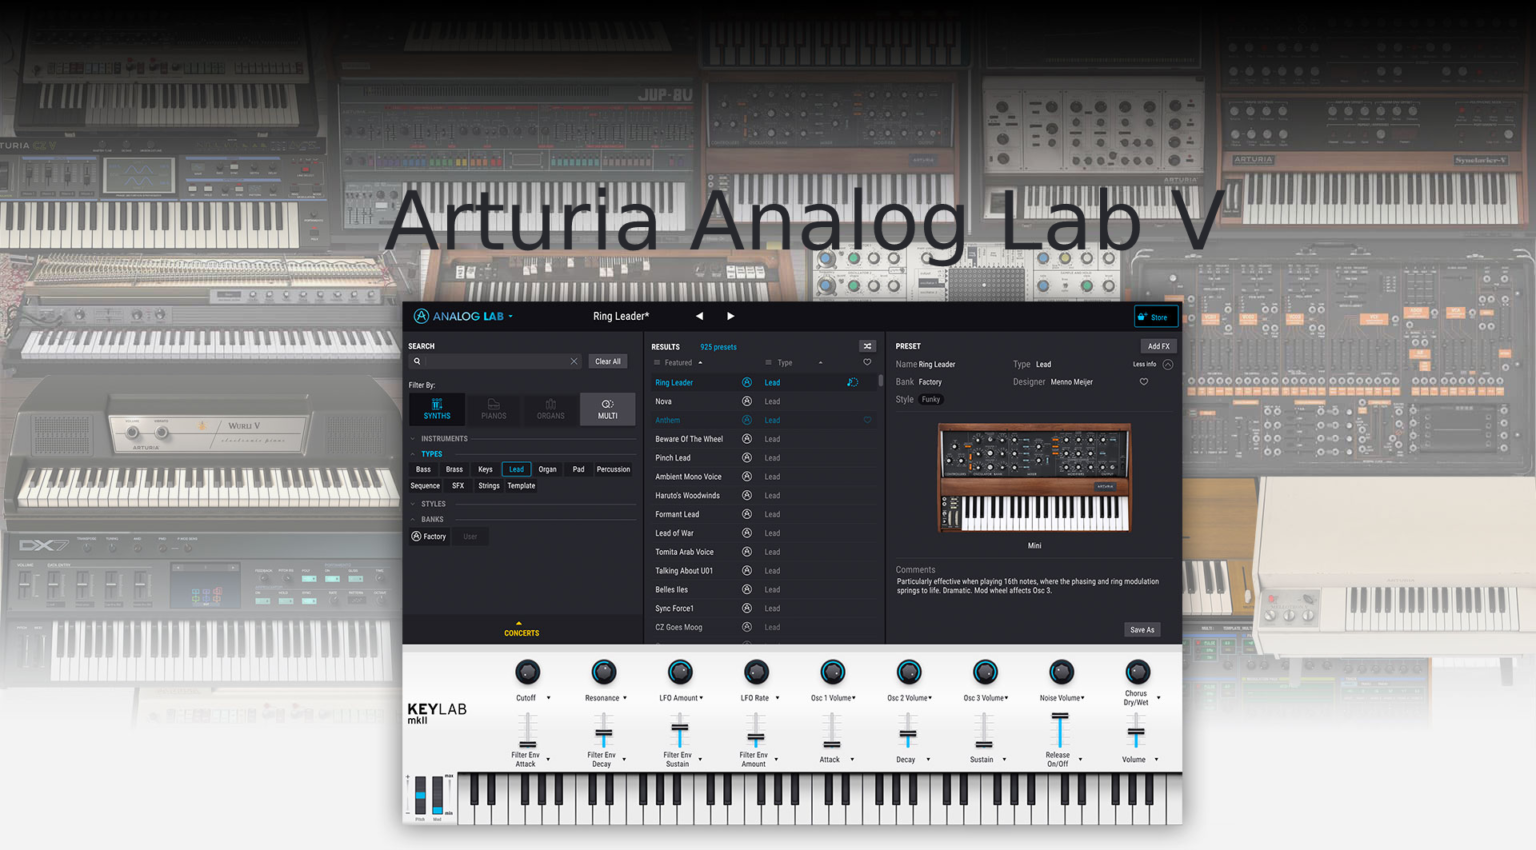 download the last version for windows Arturia Analog Lab 5.7.4